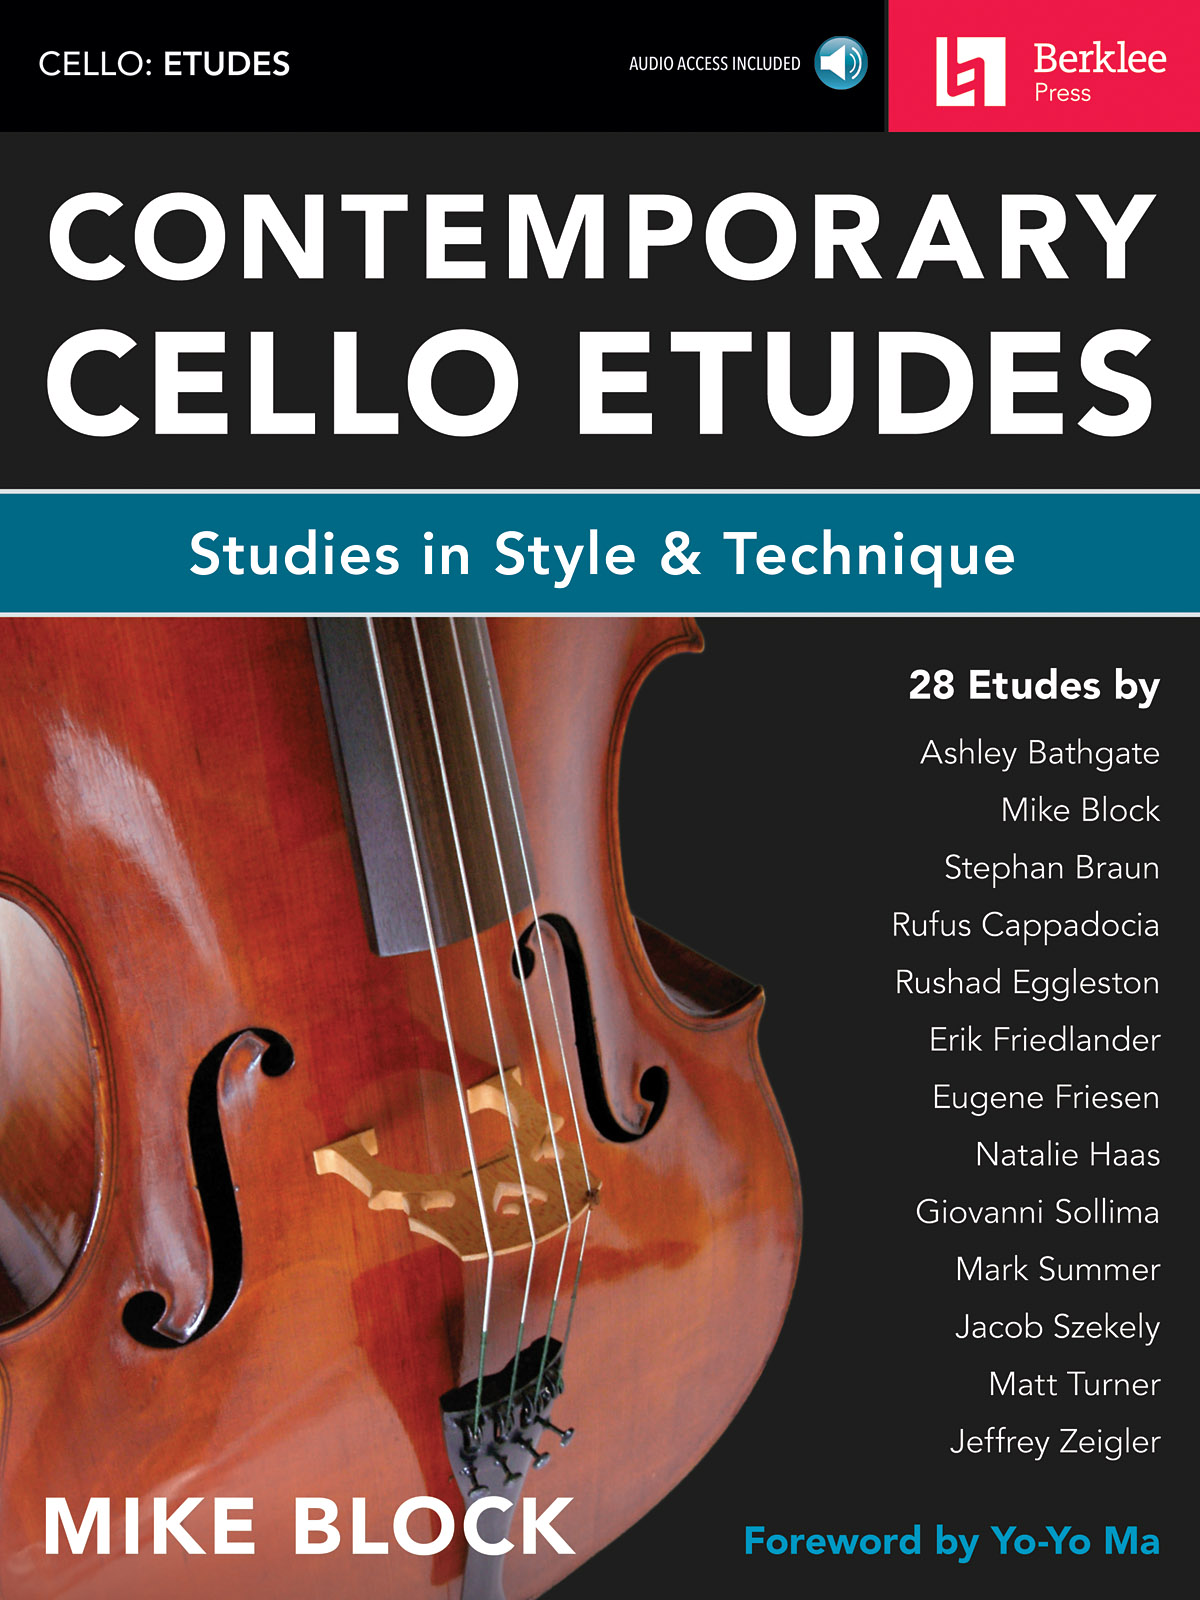 Contemporary Cello Etudes - Studies in Style & Technique - etudy pro violoncello